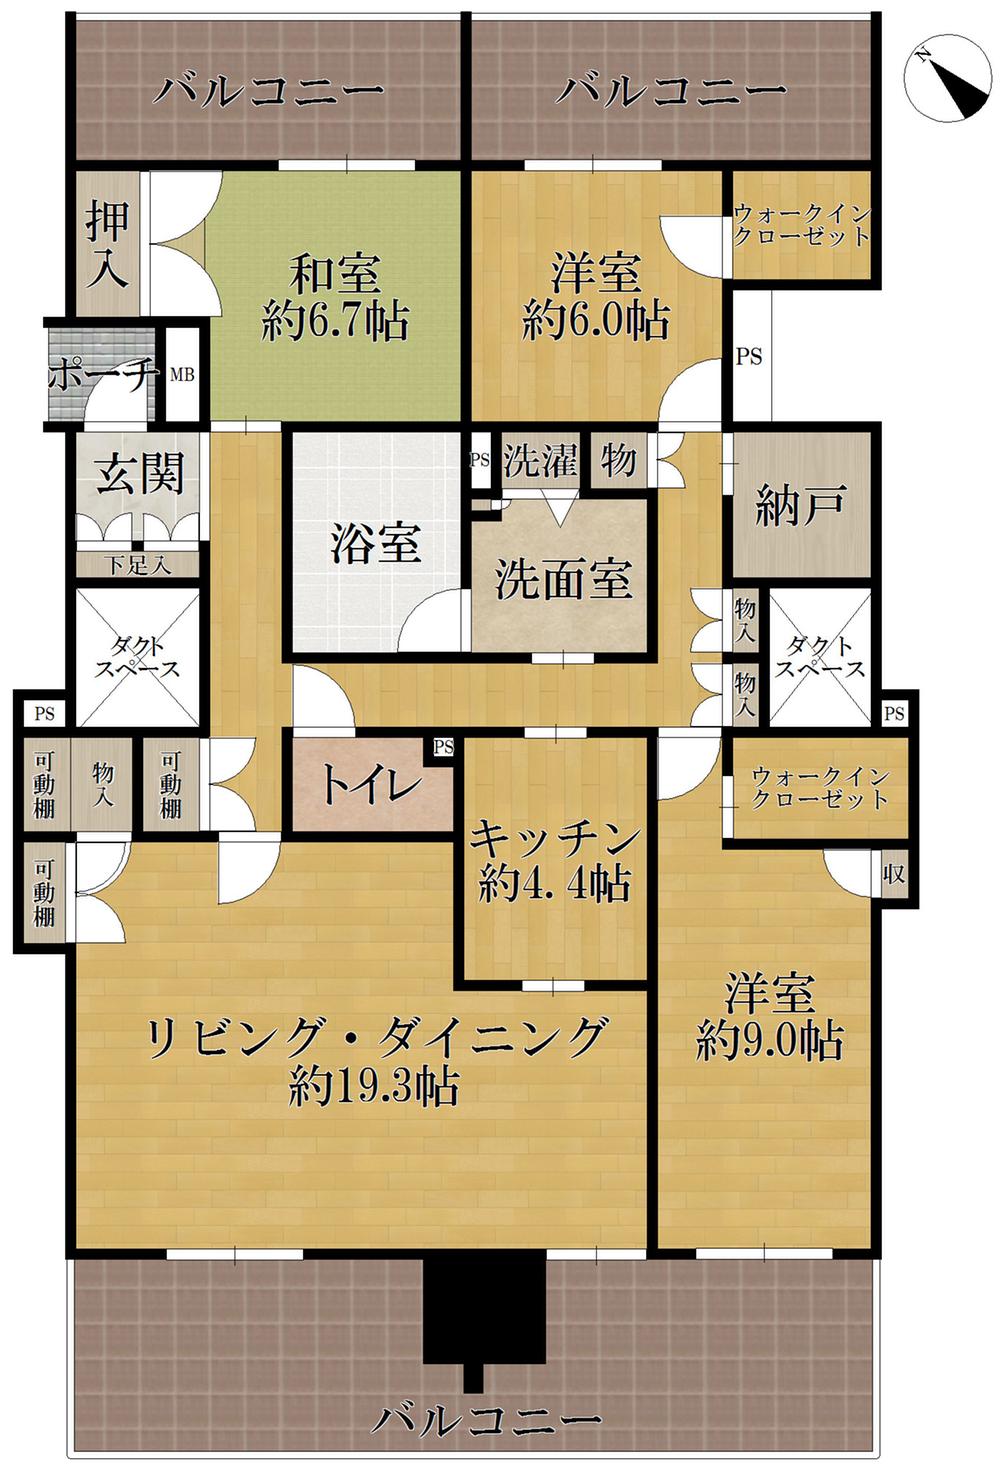 Floor plan. 3LDK, Price 110 million yen, Footprint 122 sq m , Balcony area 47.32 sq m